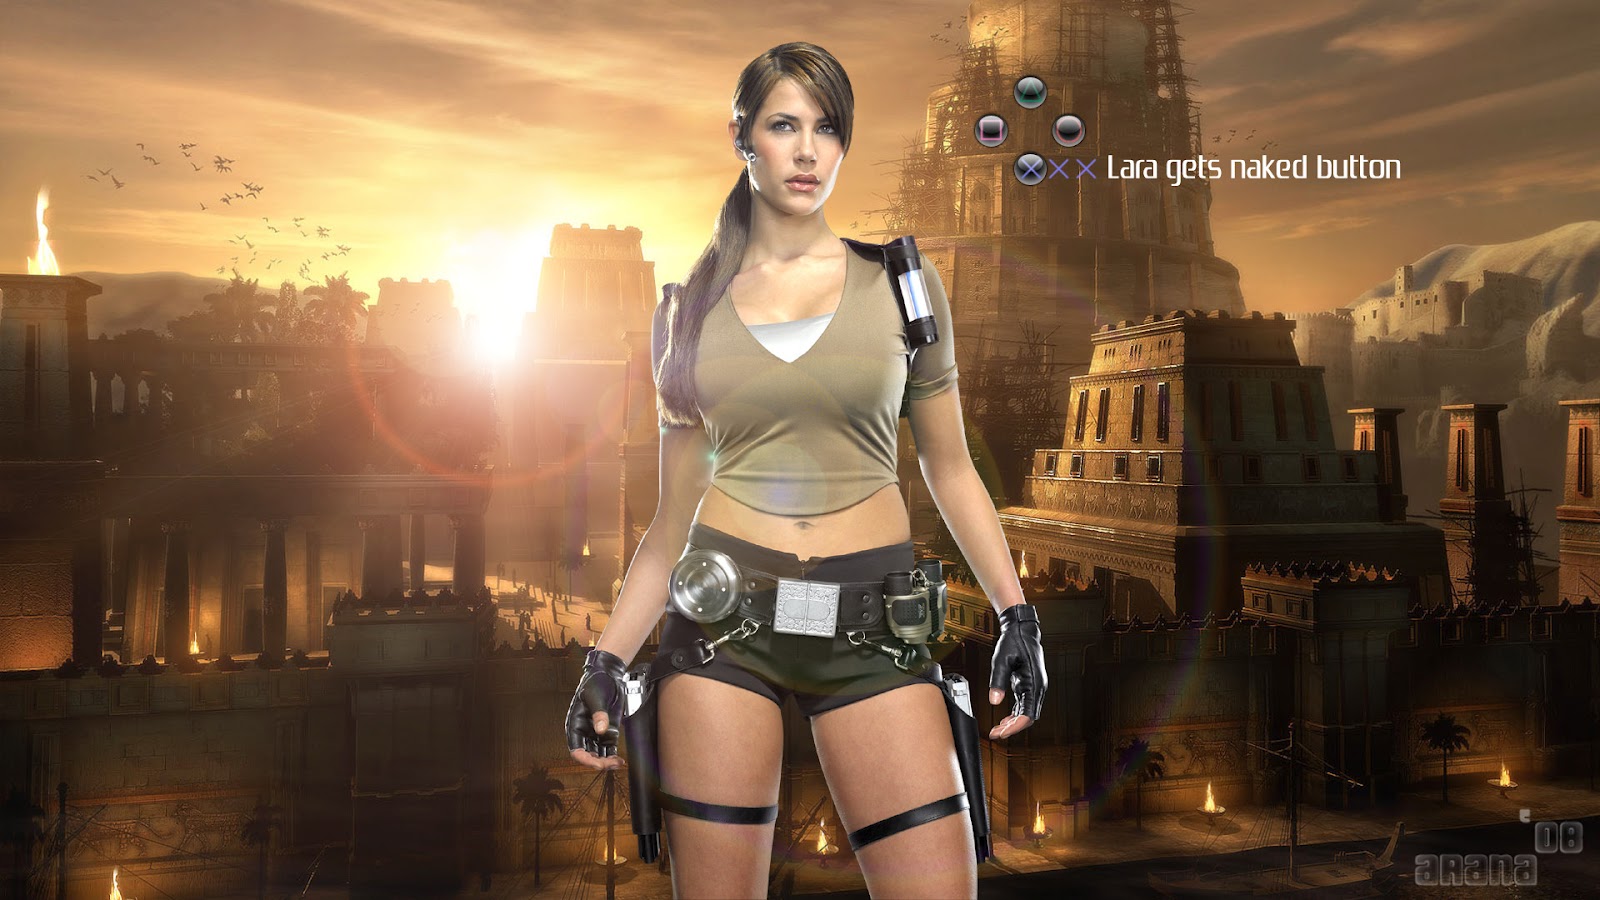 Lara Croft Profile And Beautiful Latest Hot Wallpaper Hollywood Stars Hd Wallpapers